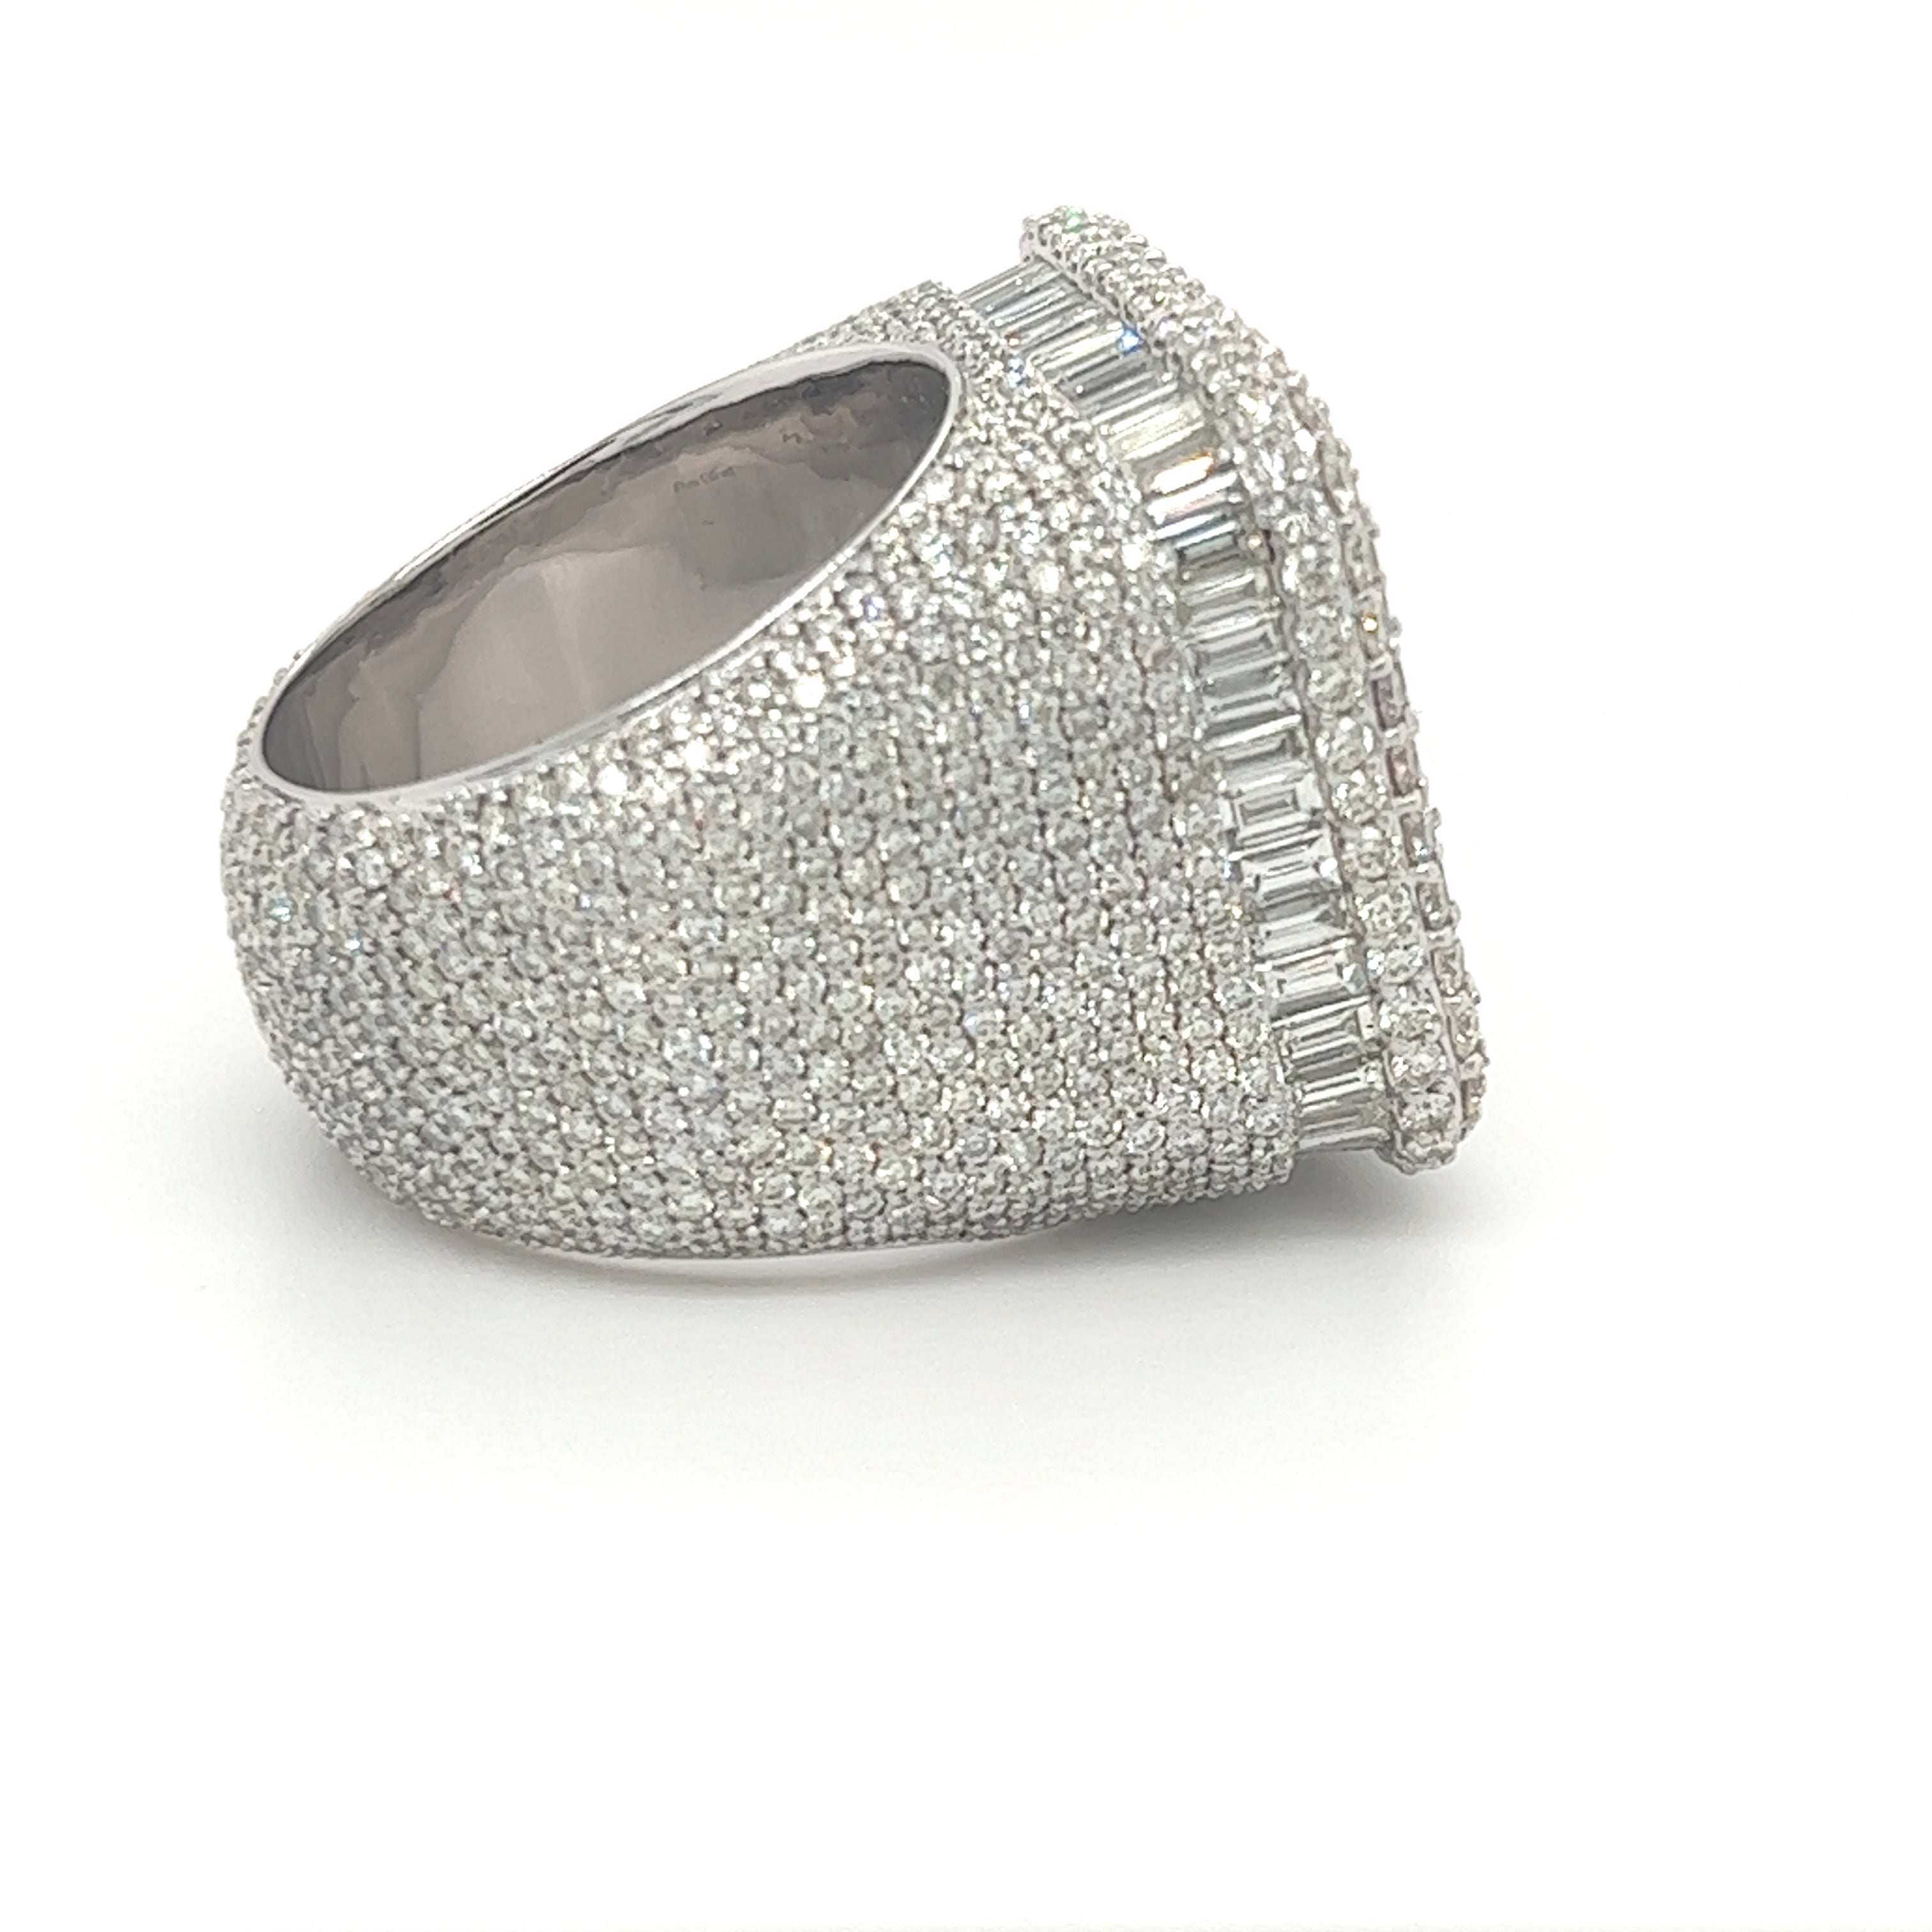 15.85CT. Diamond Ring in 14K Gold - White Carat - USA & Canada